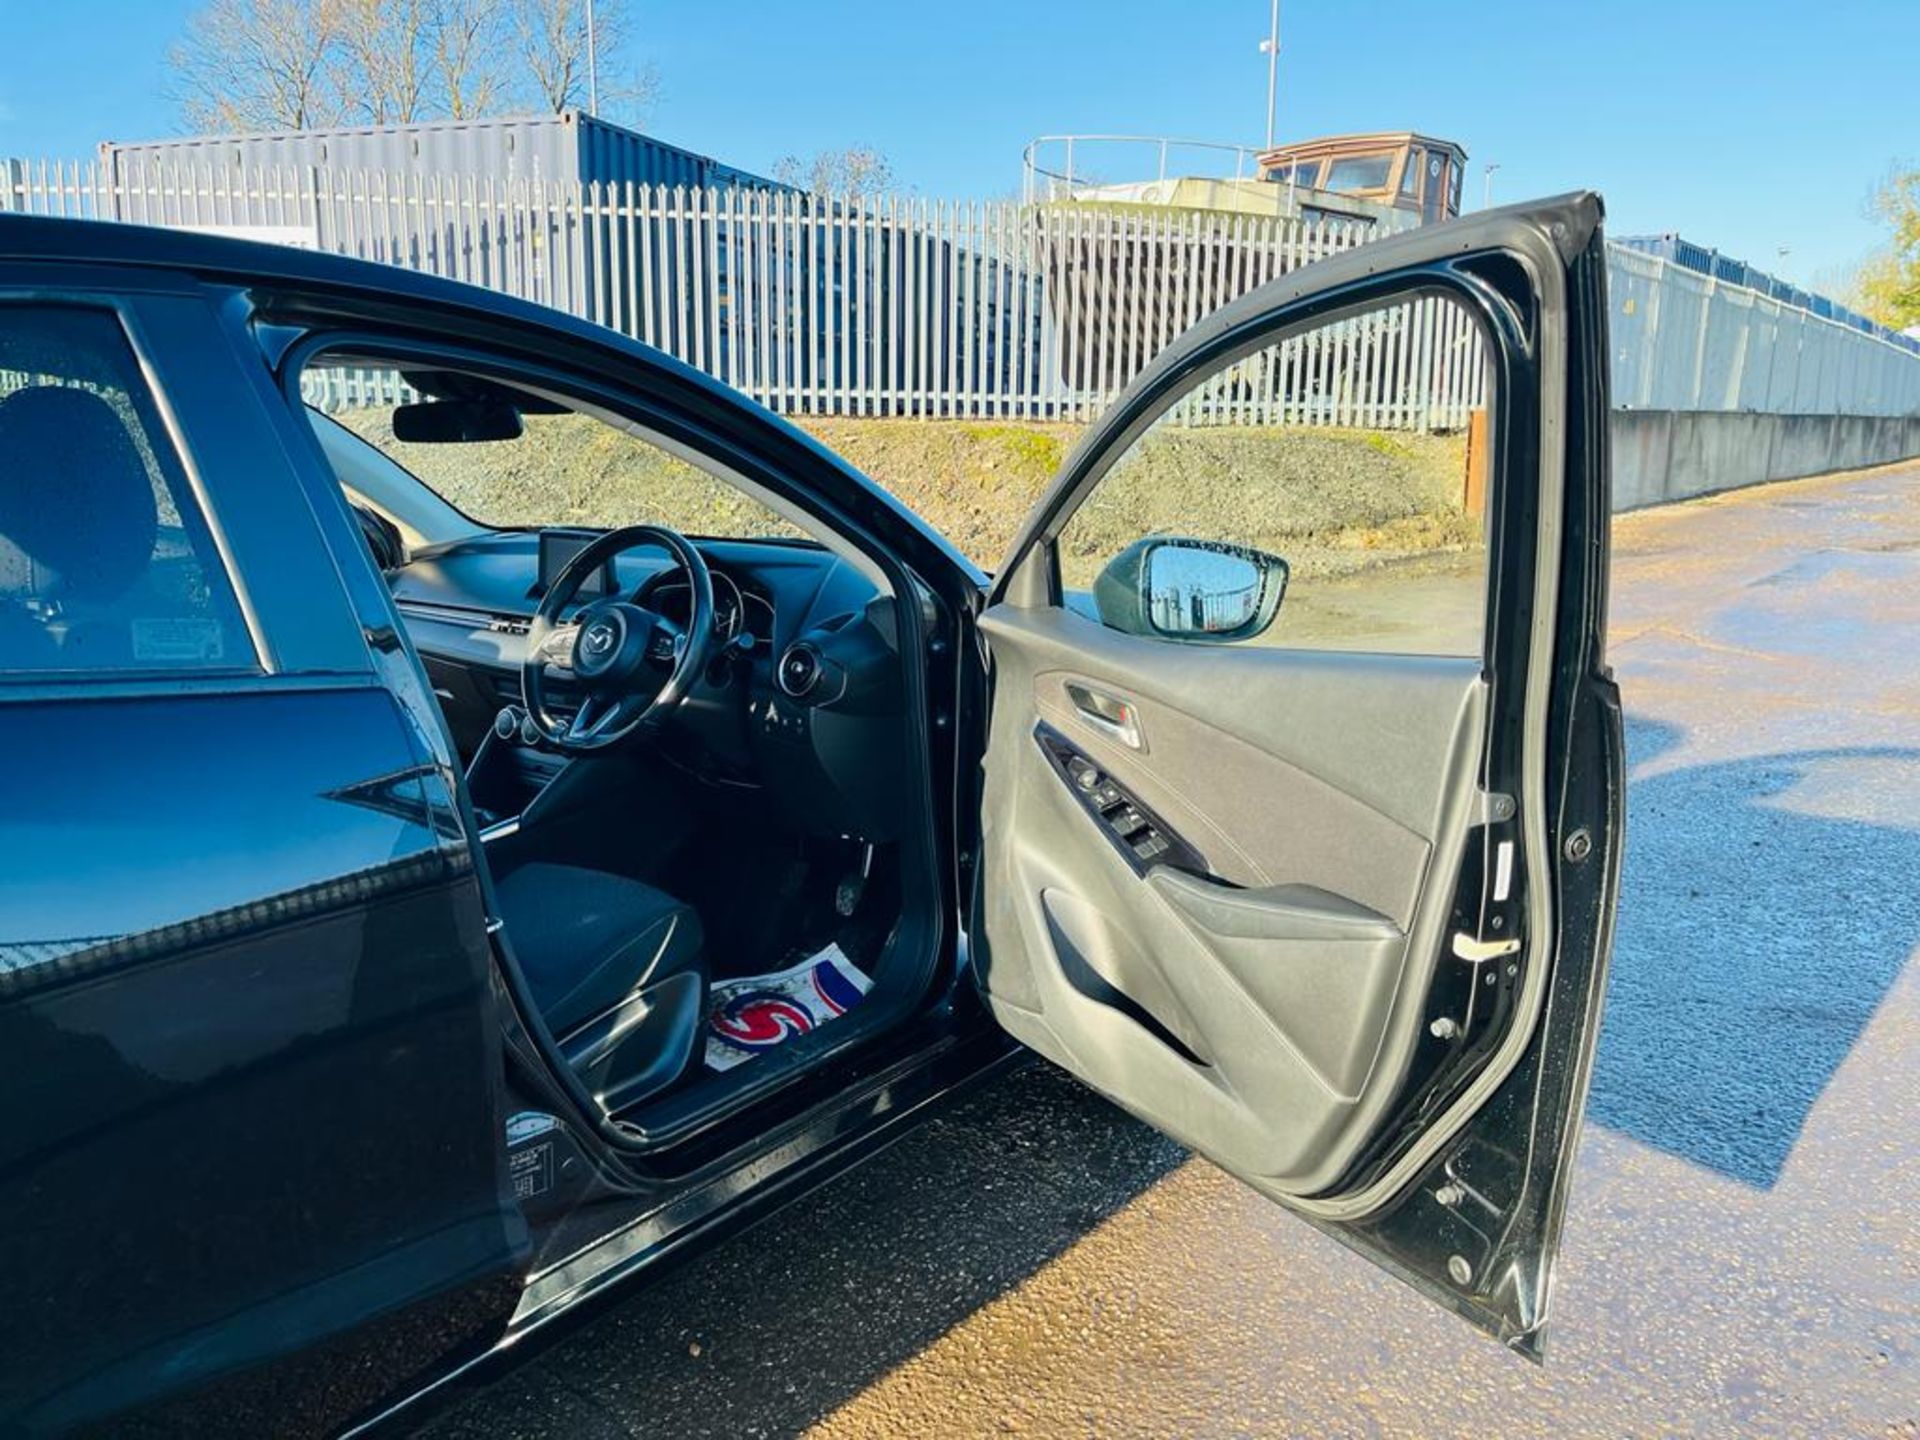 ** ON SALE ** Mazda 2 1.5 90 Sport Nav+ Hatchback 2019 '19 Reg' A/C - ULEZ Compliant - Image 11 of 35